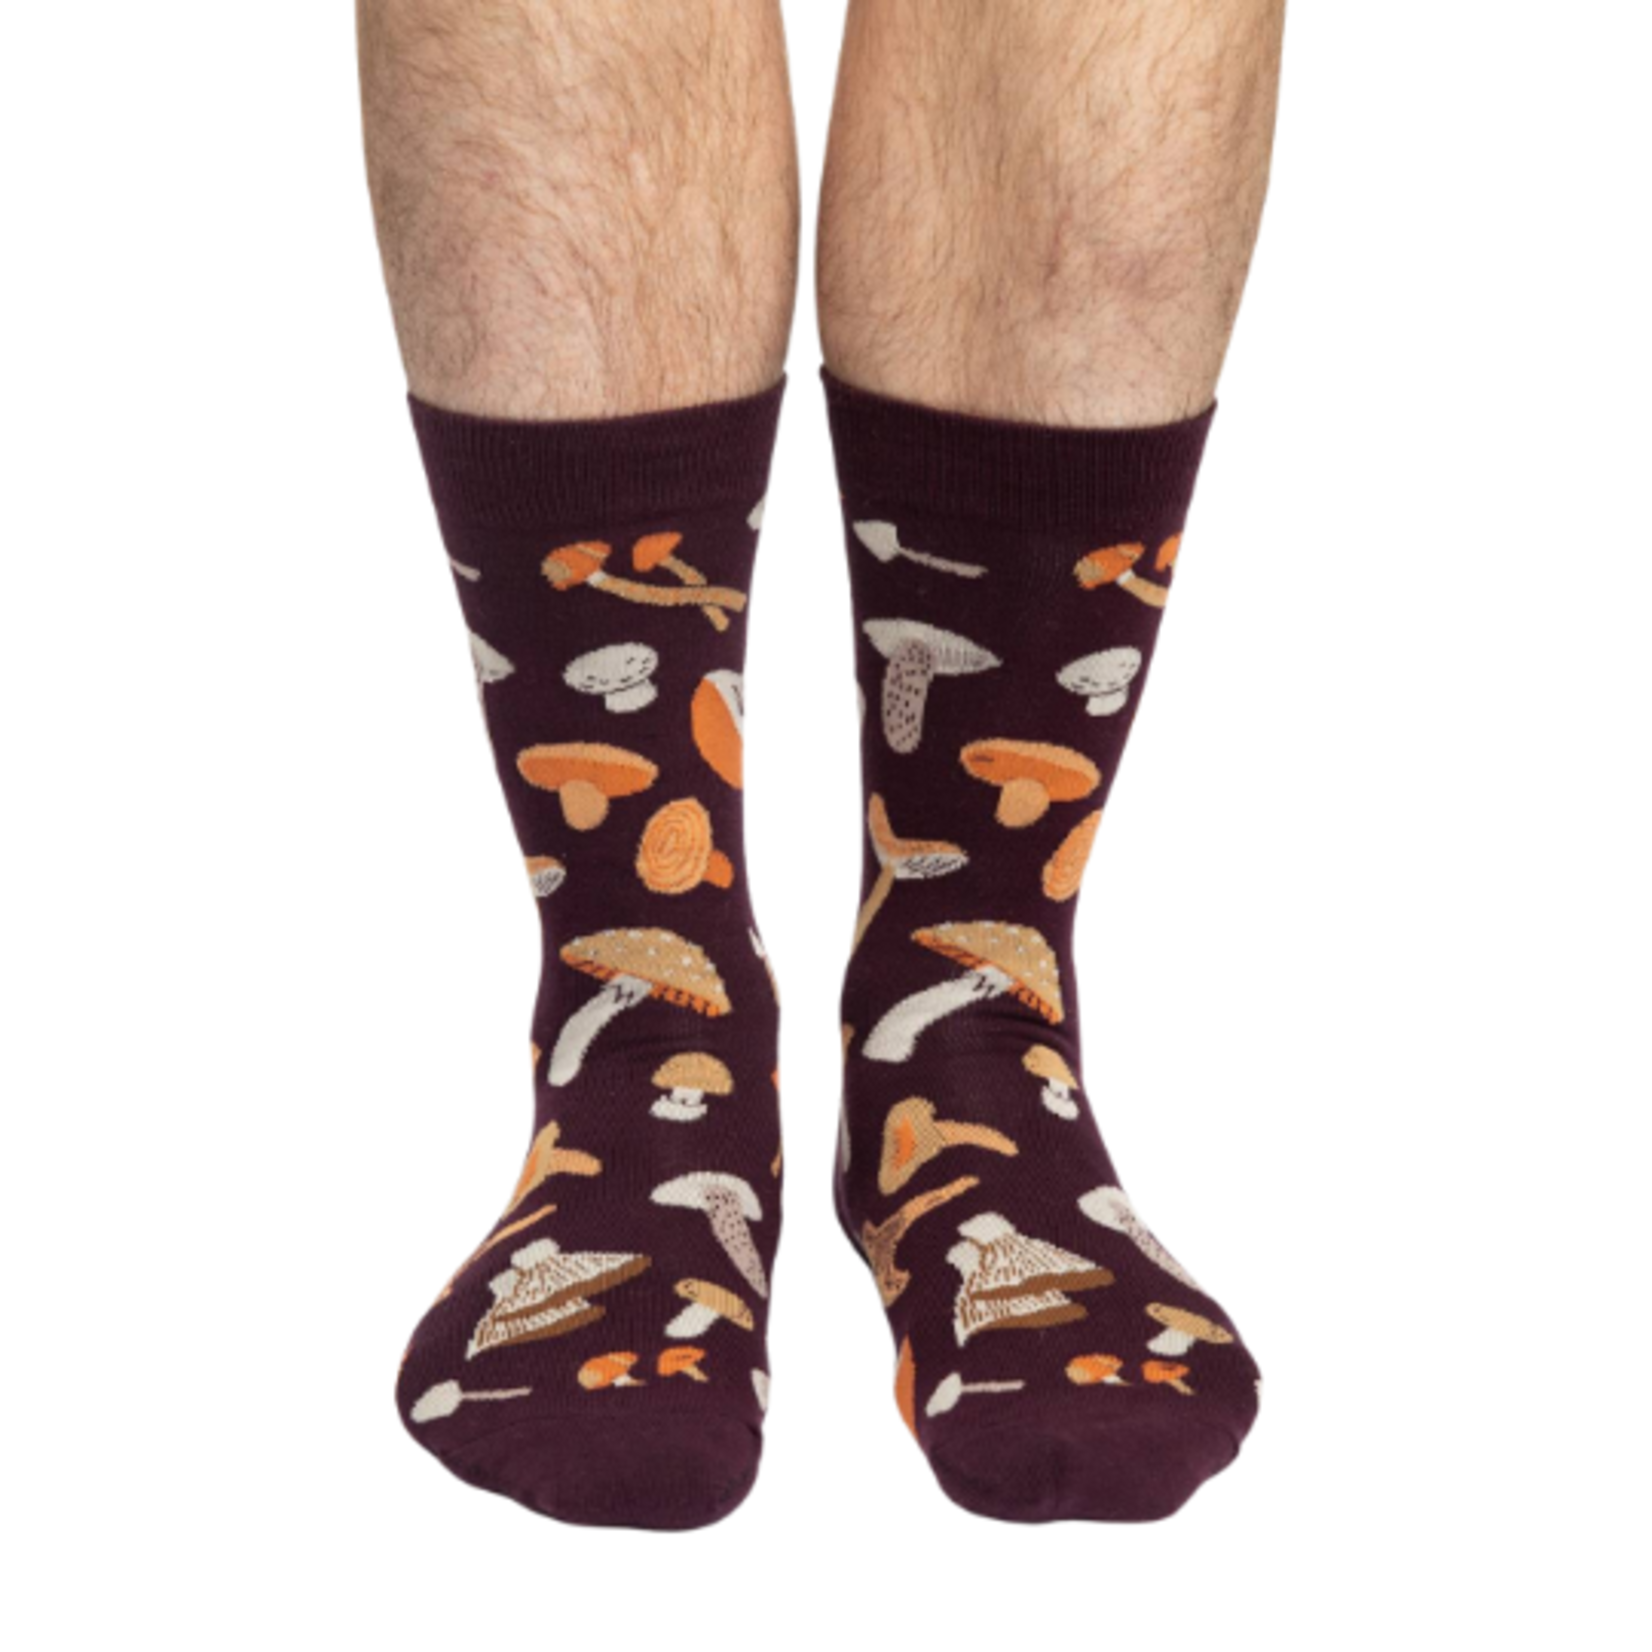 Mushroom Socks - Men’s Size 13 - 17